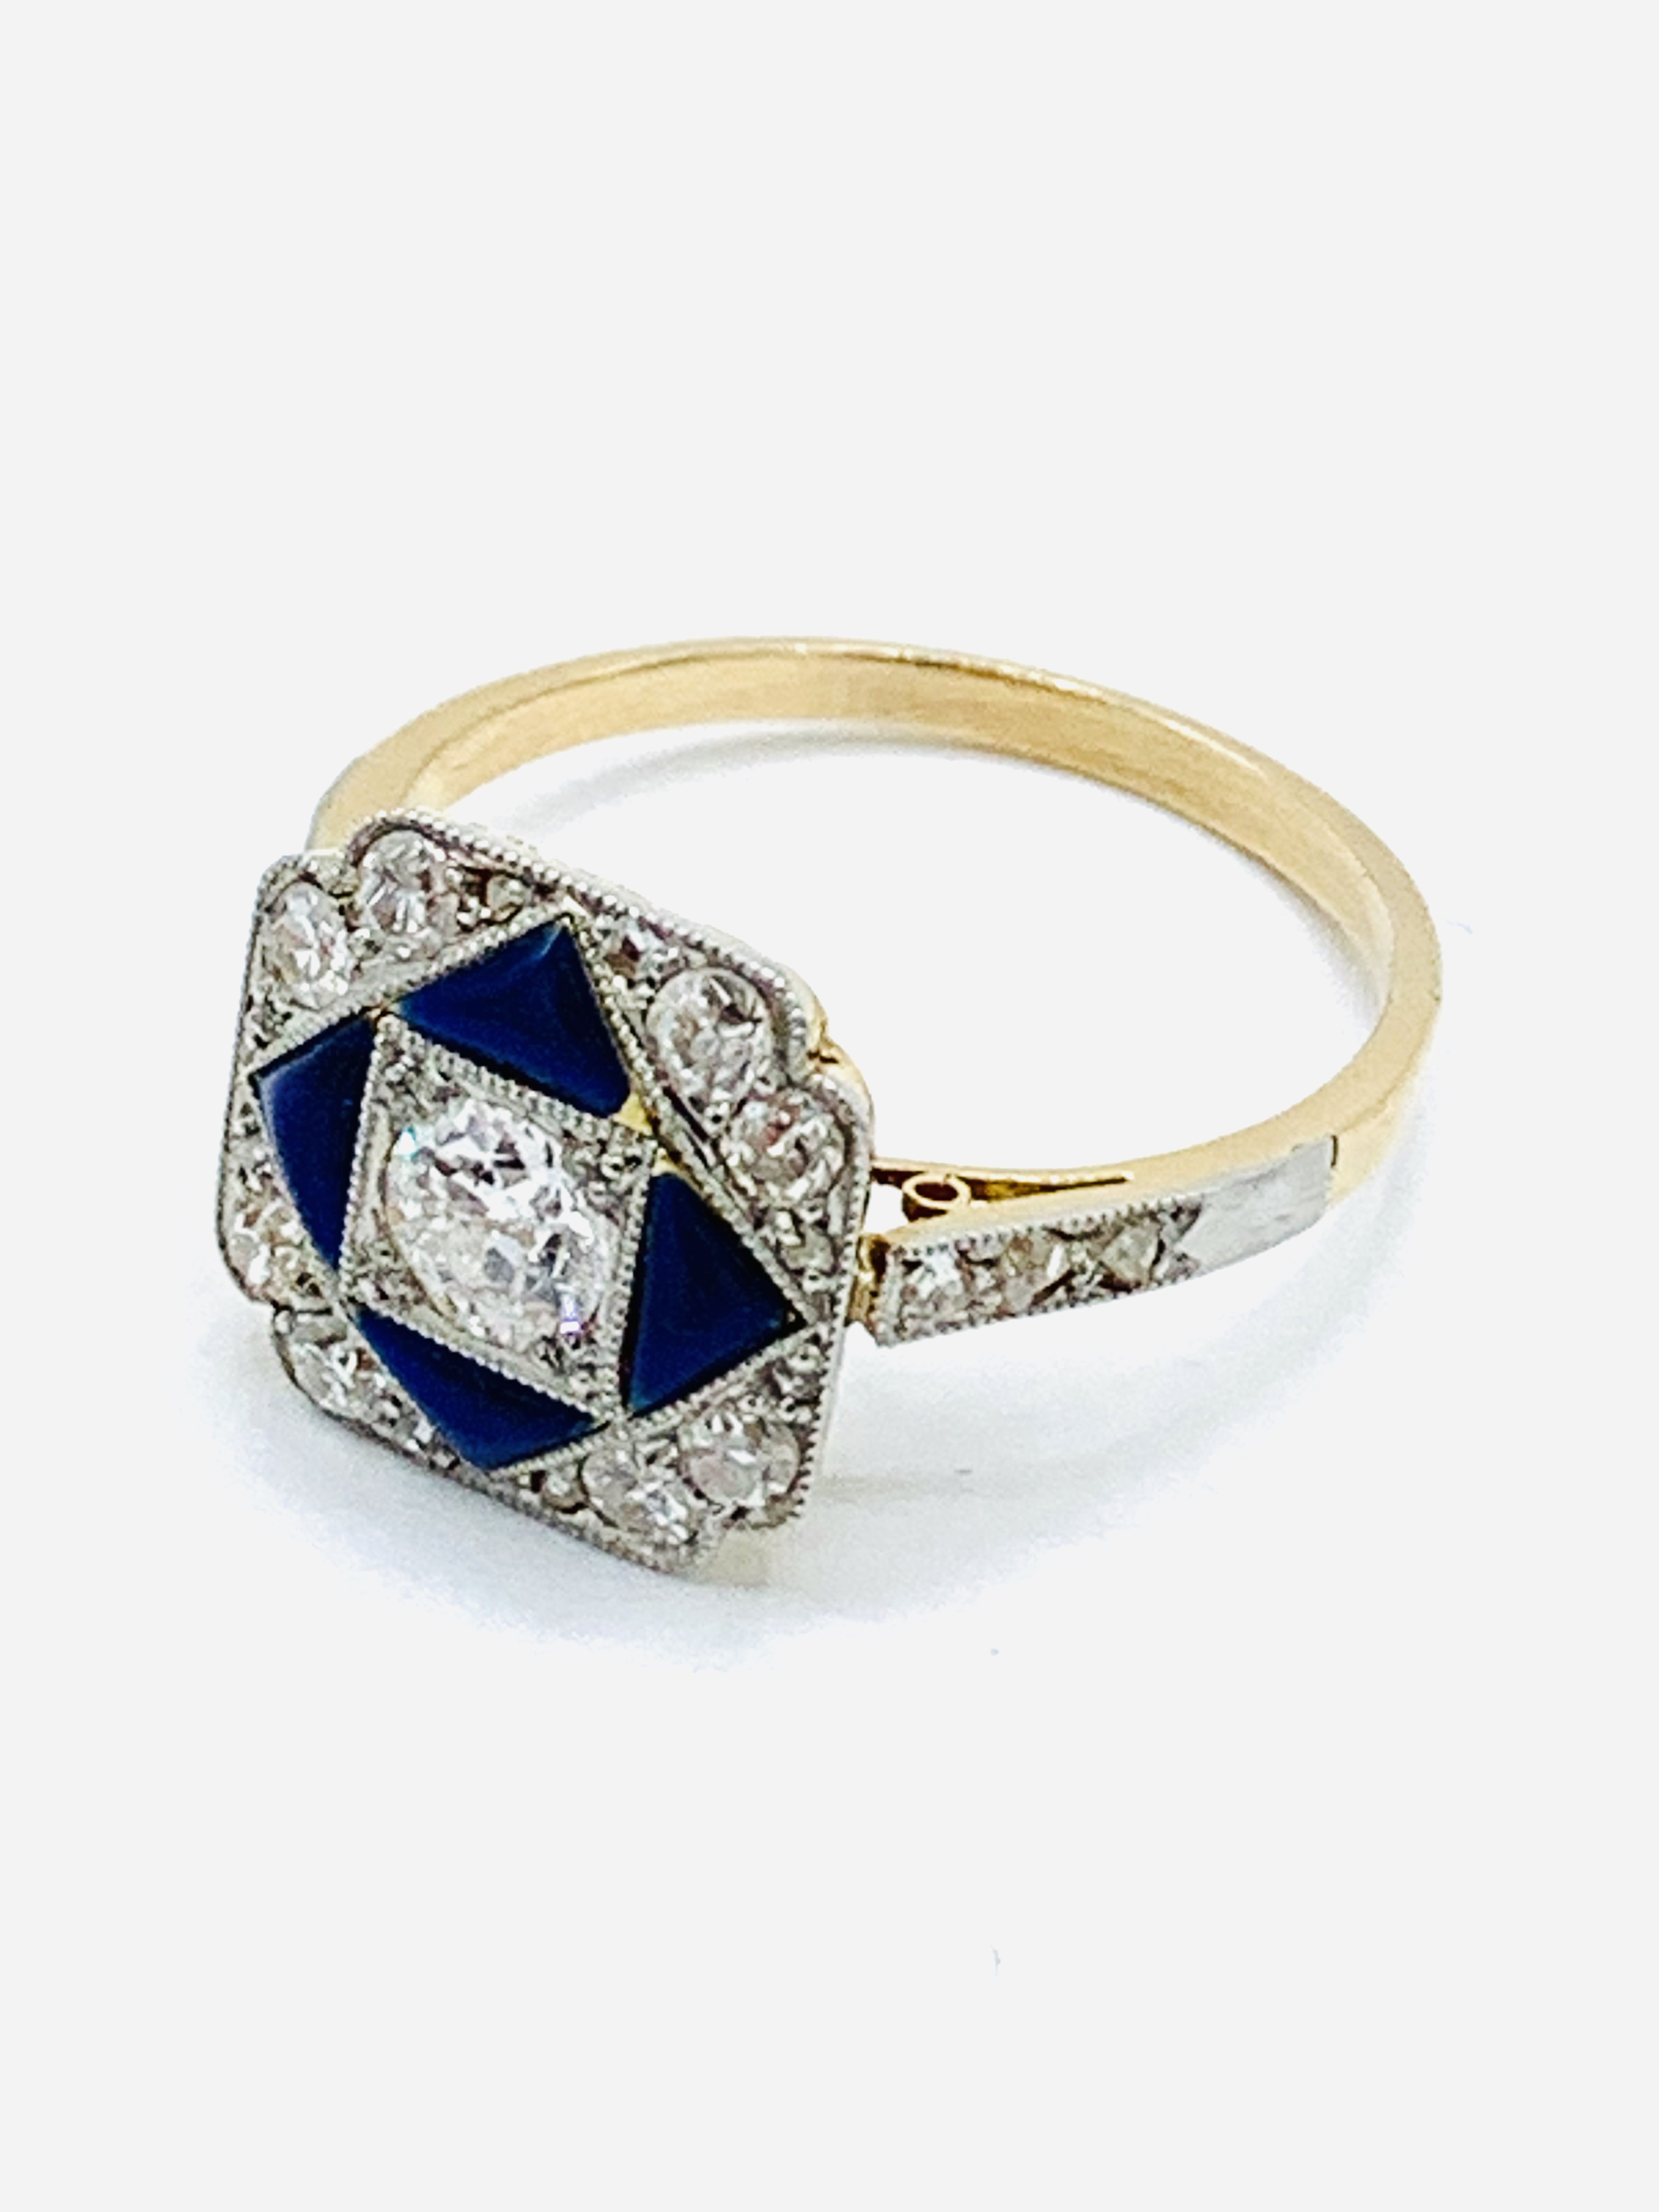 Diamond and blue enamel ring. - Image 7 of 9